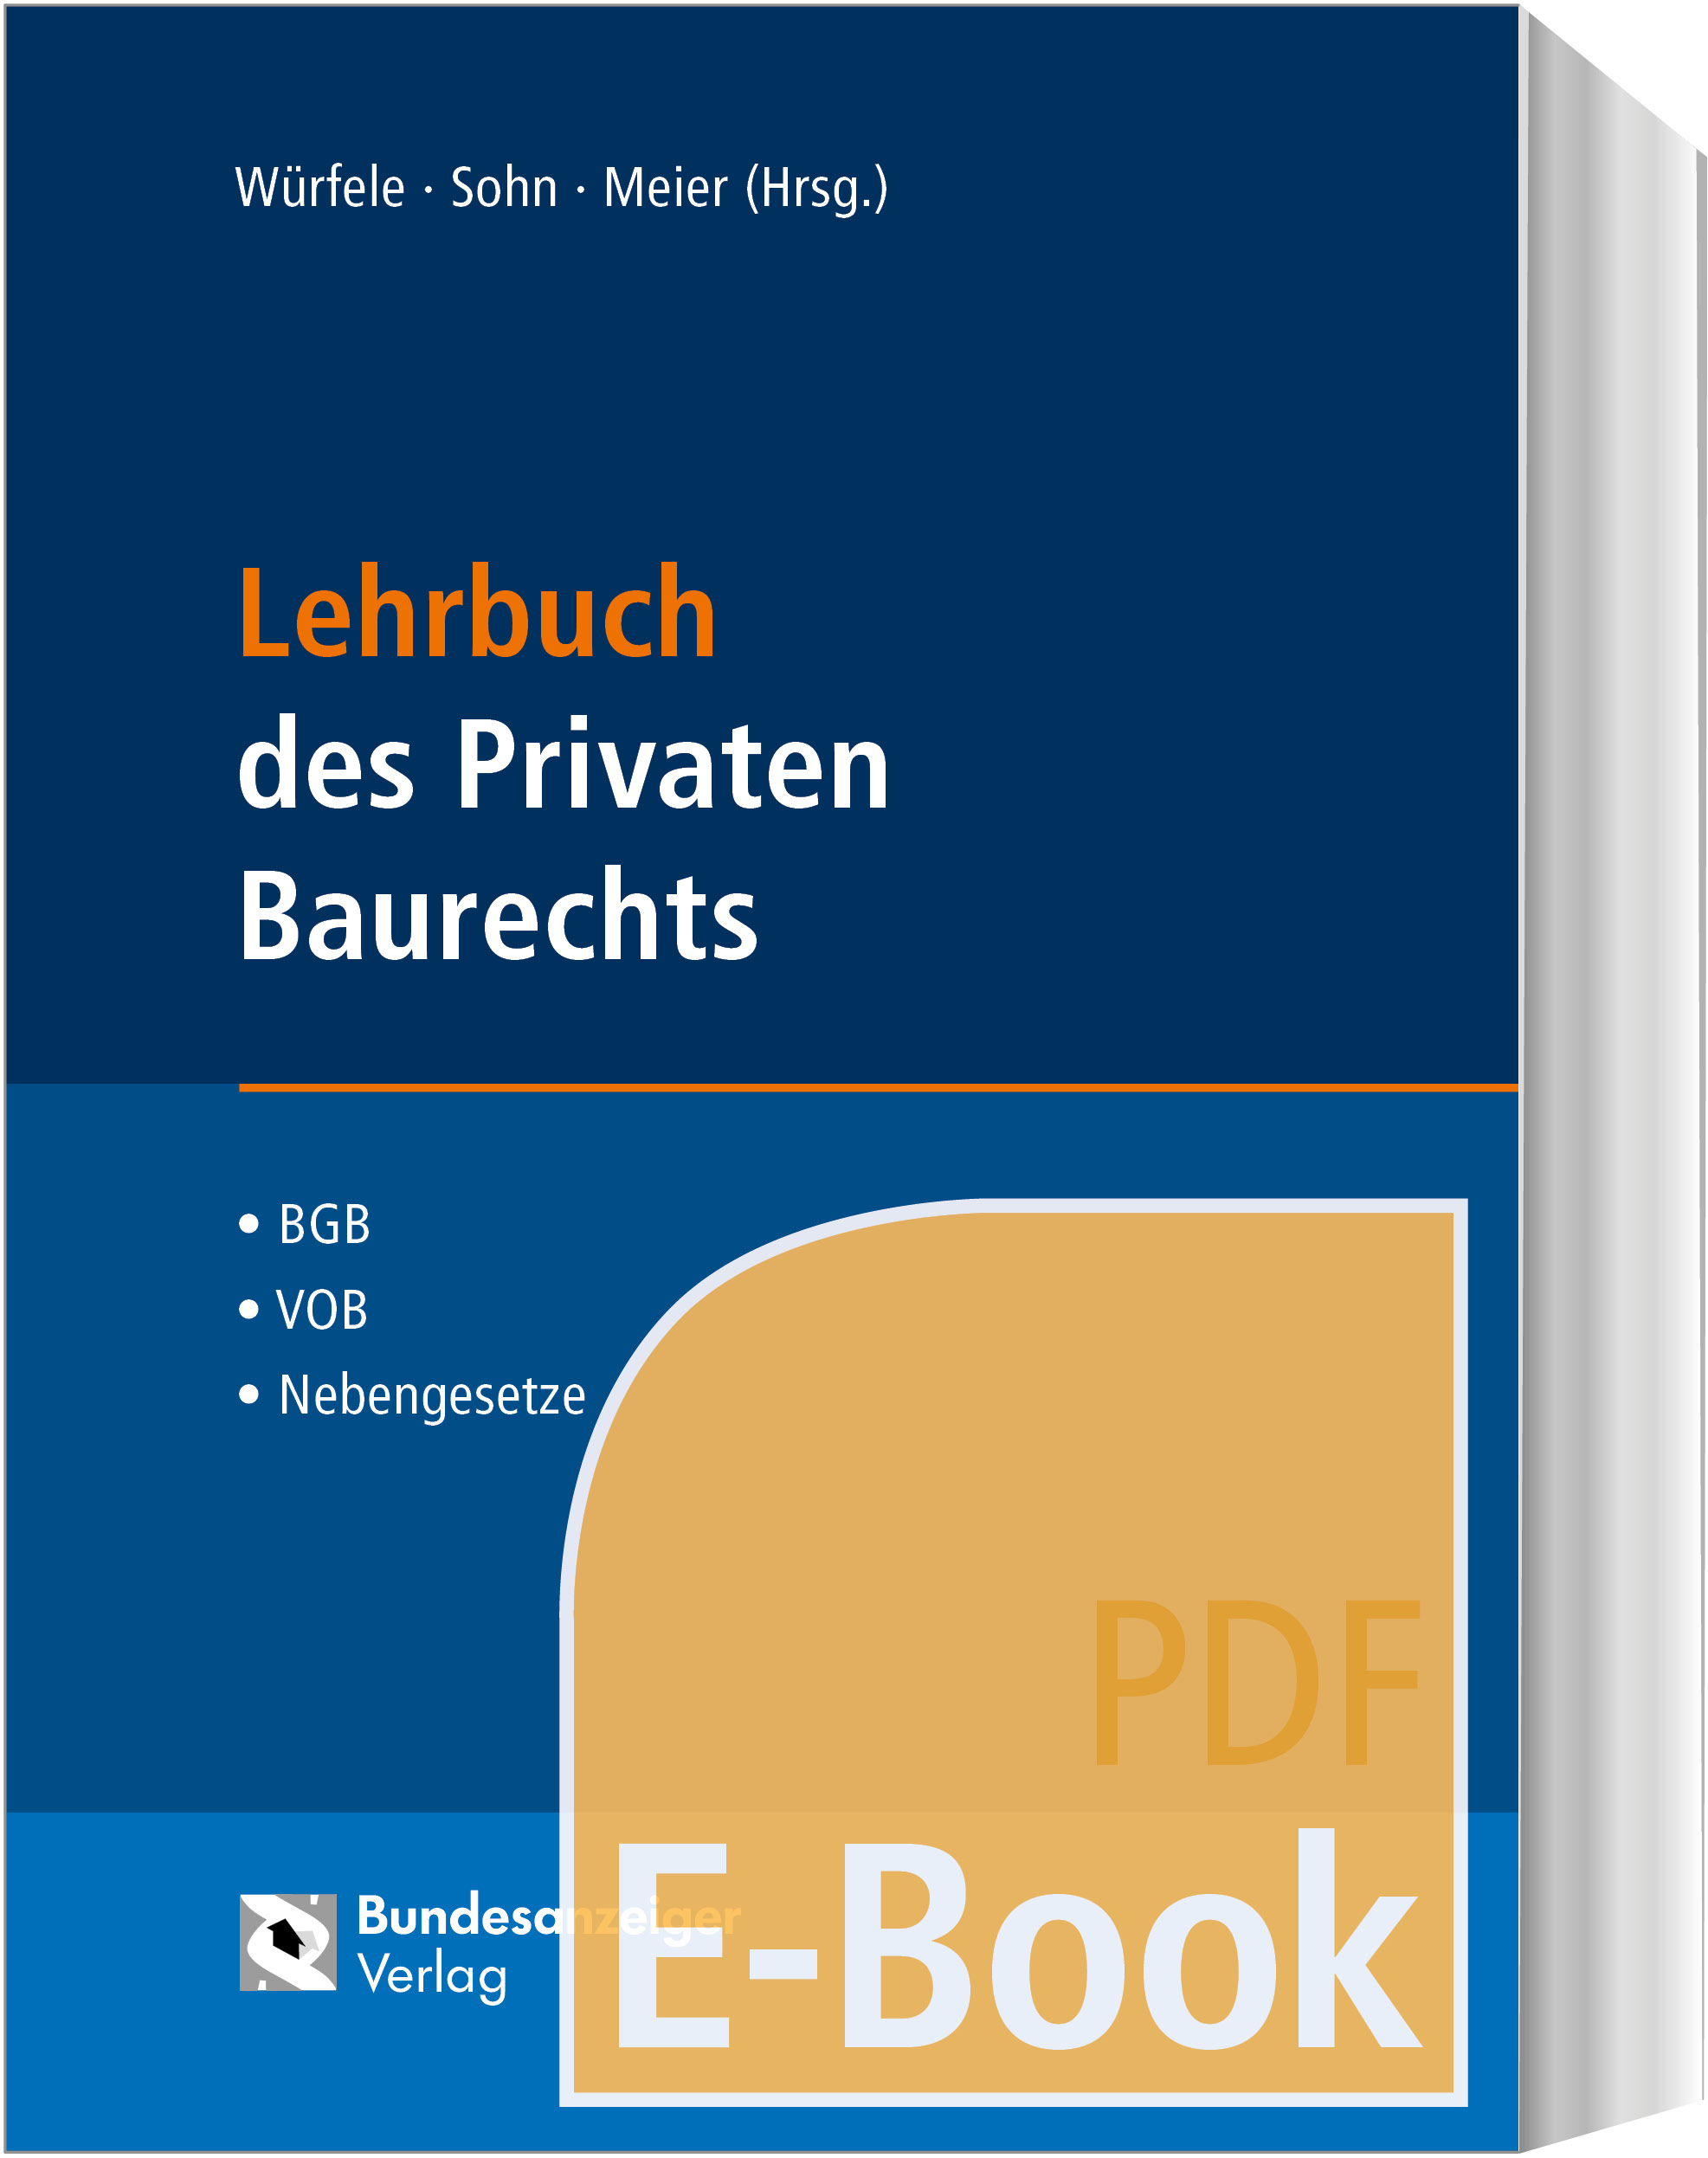 Lehrbuch des Privaten Baurechts (E-Book)